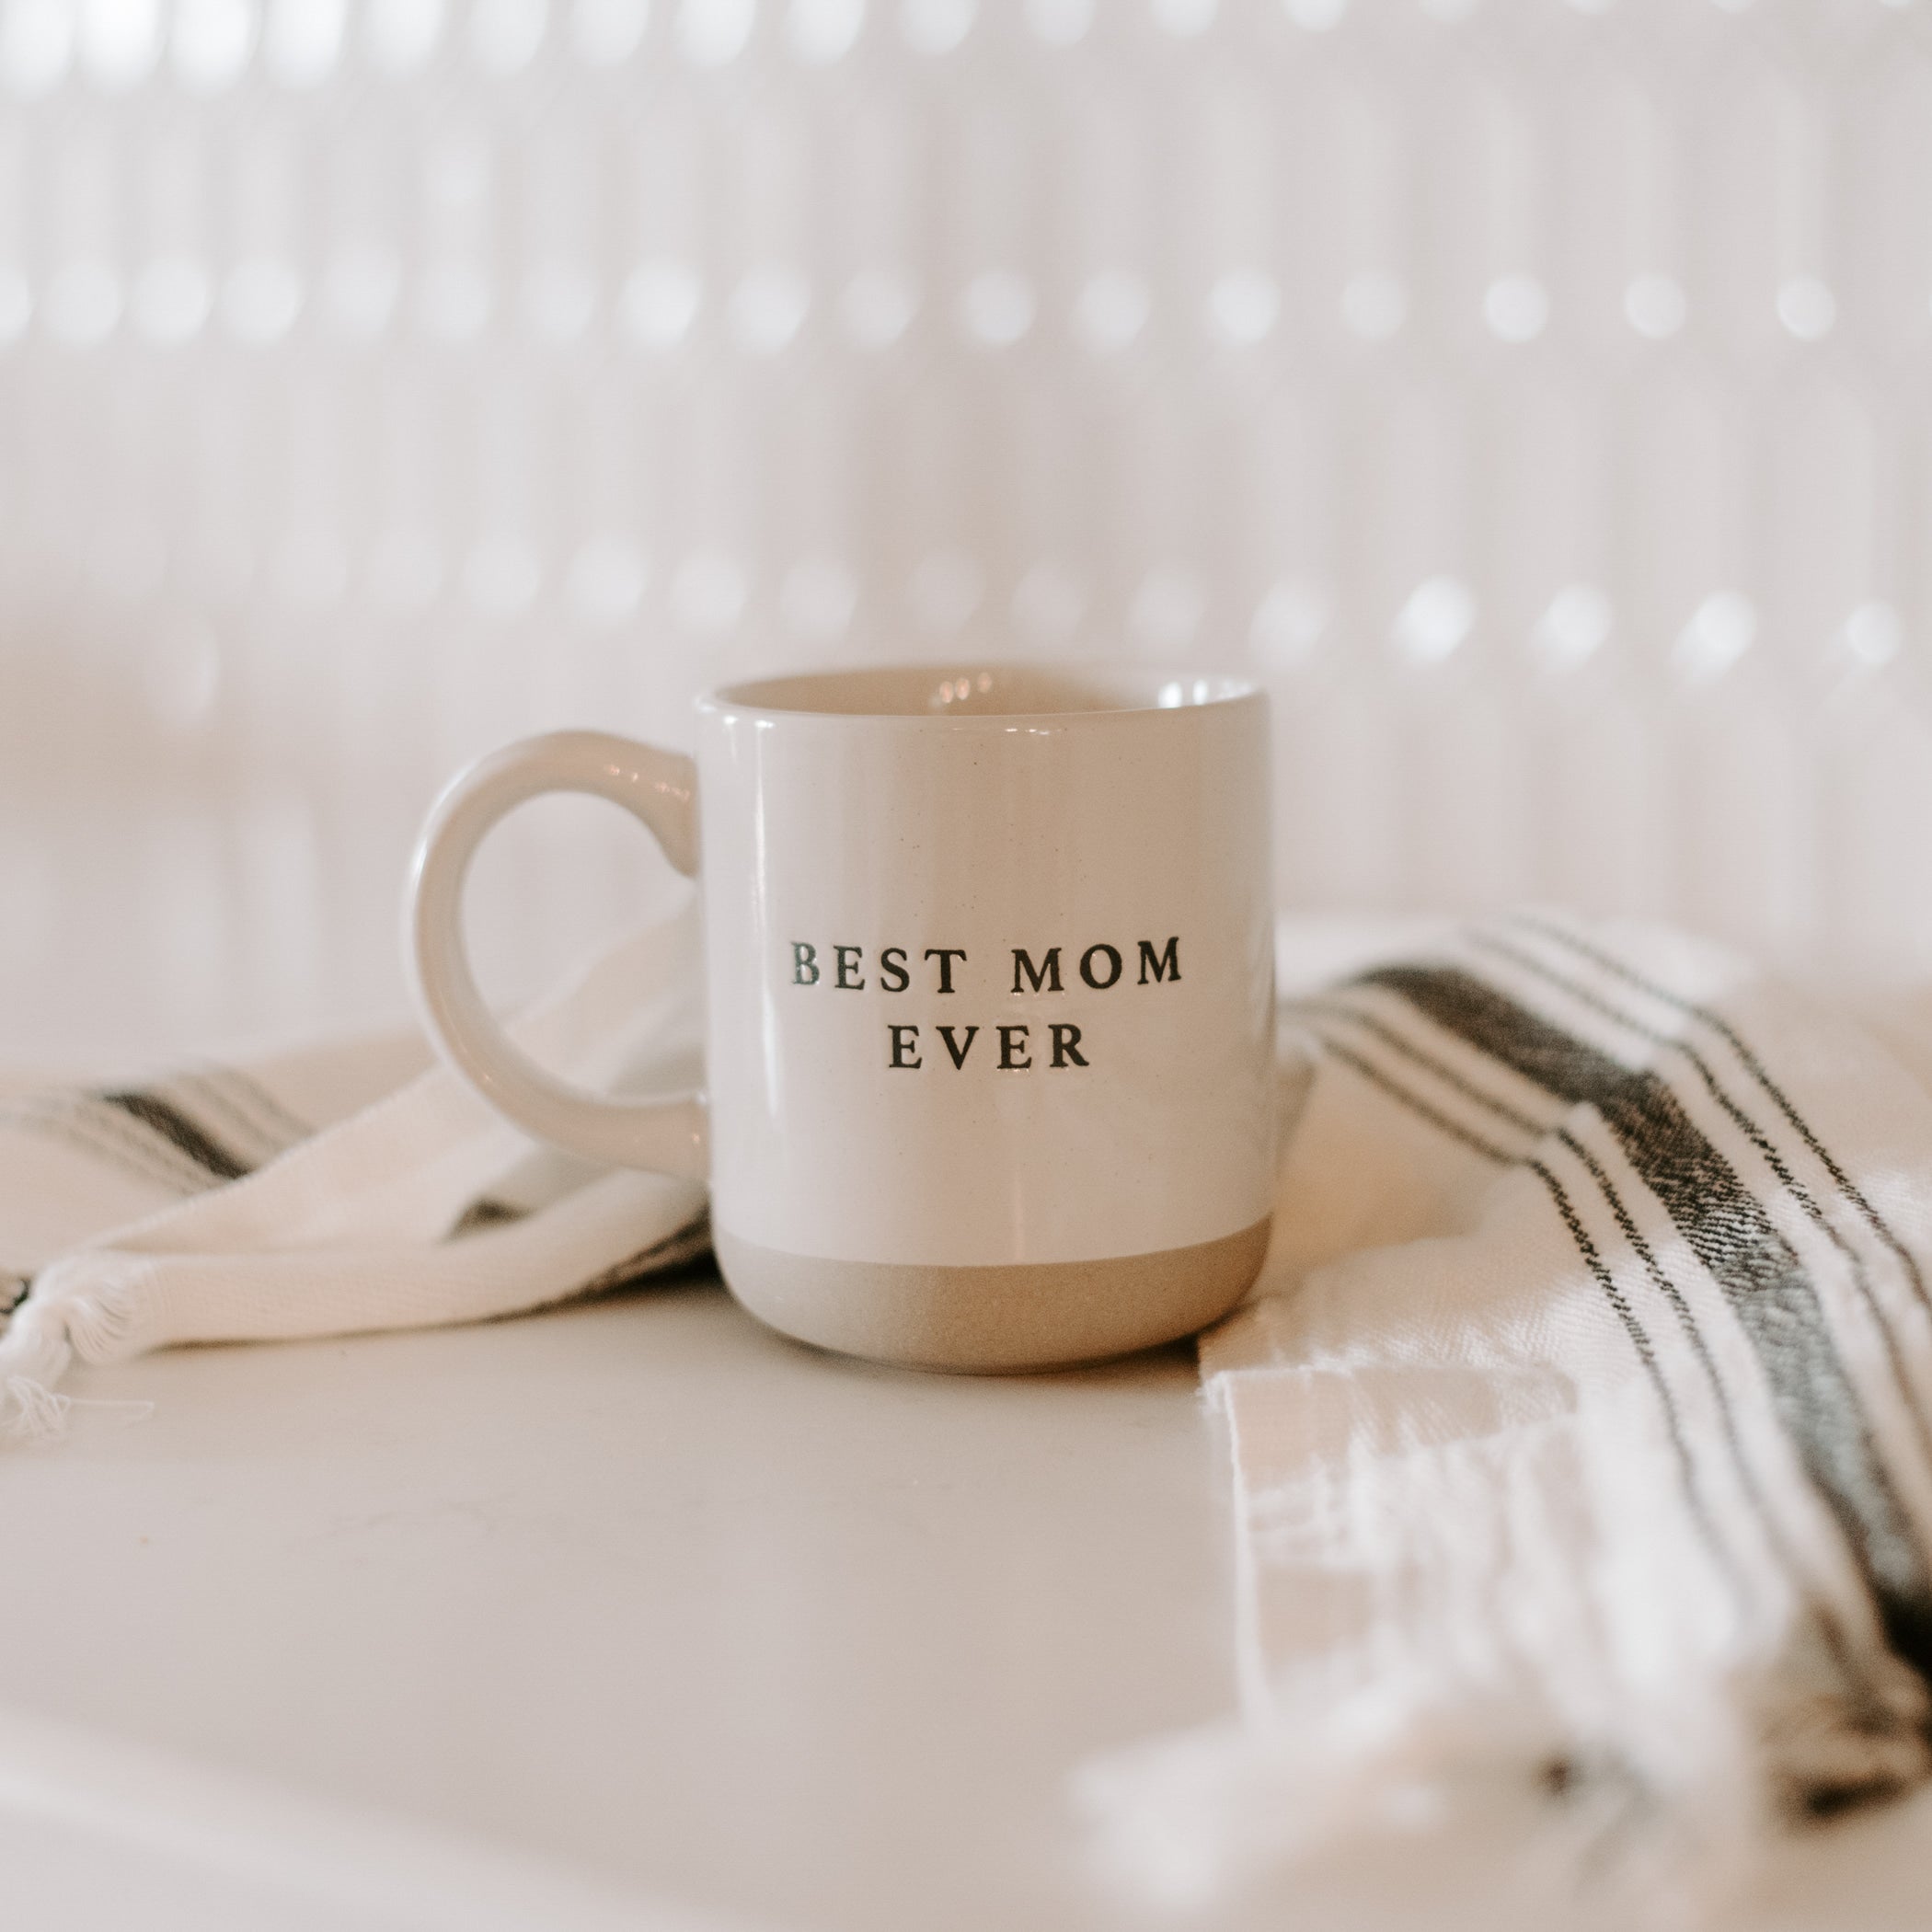 Mama Needs 14oz. Coffee Stoneware Coffee Mug